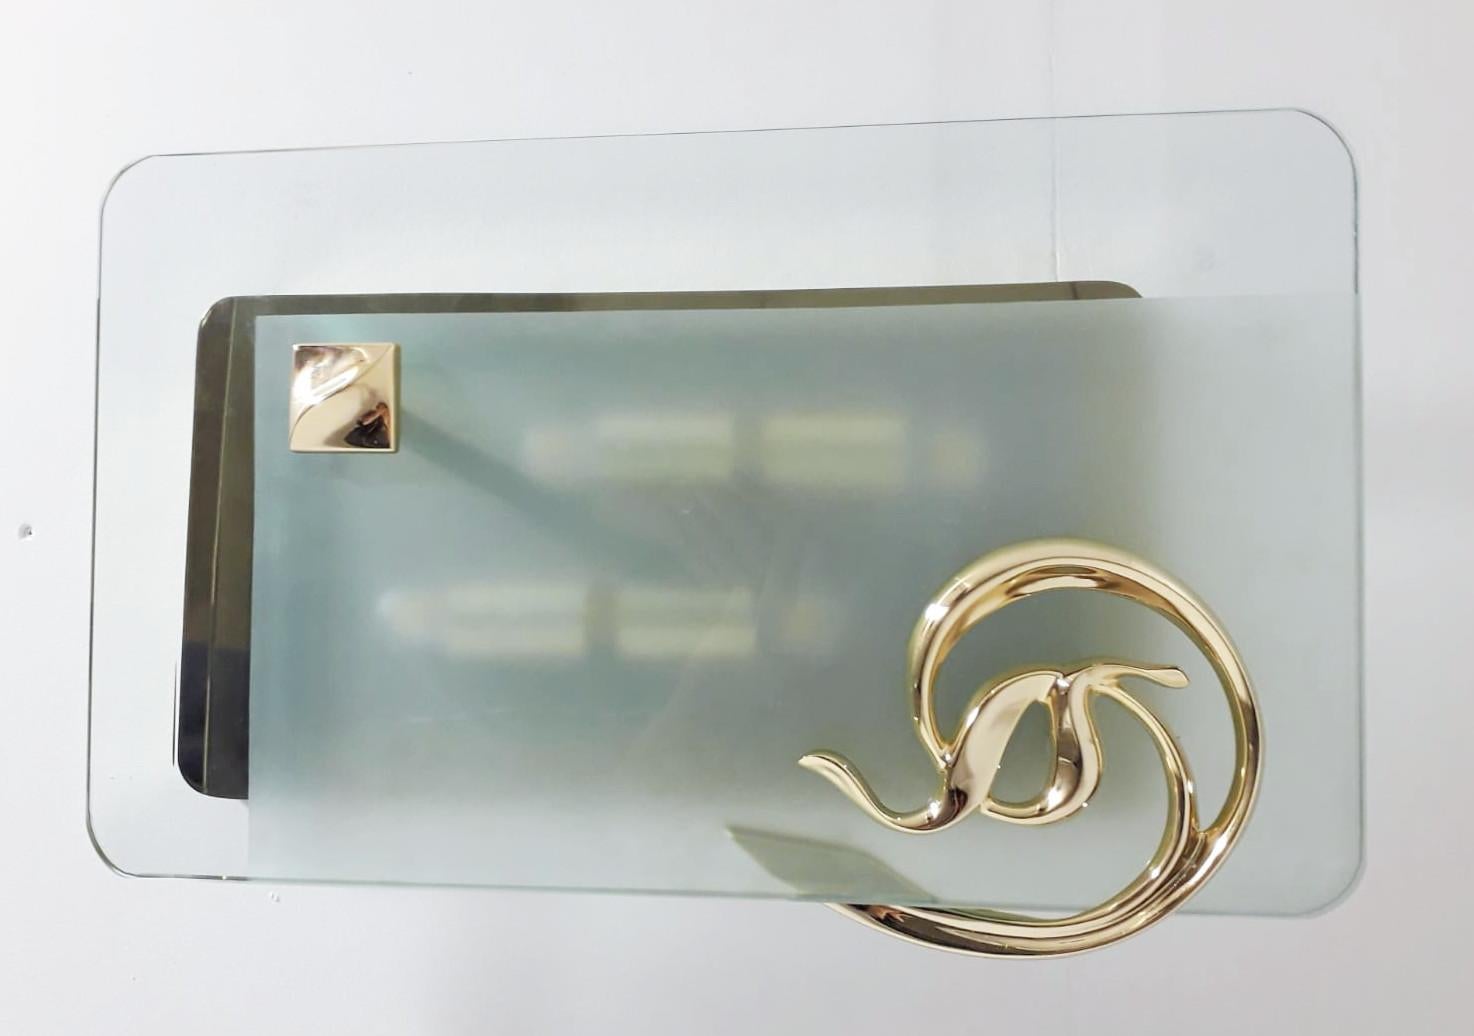 Italian Art Deco Beveled Sconce / Flushmount by Fratelli Martini - 3 available